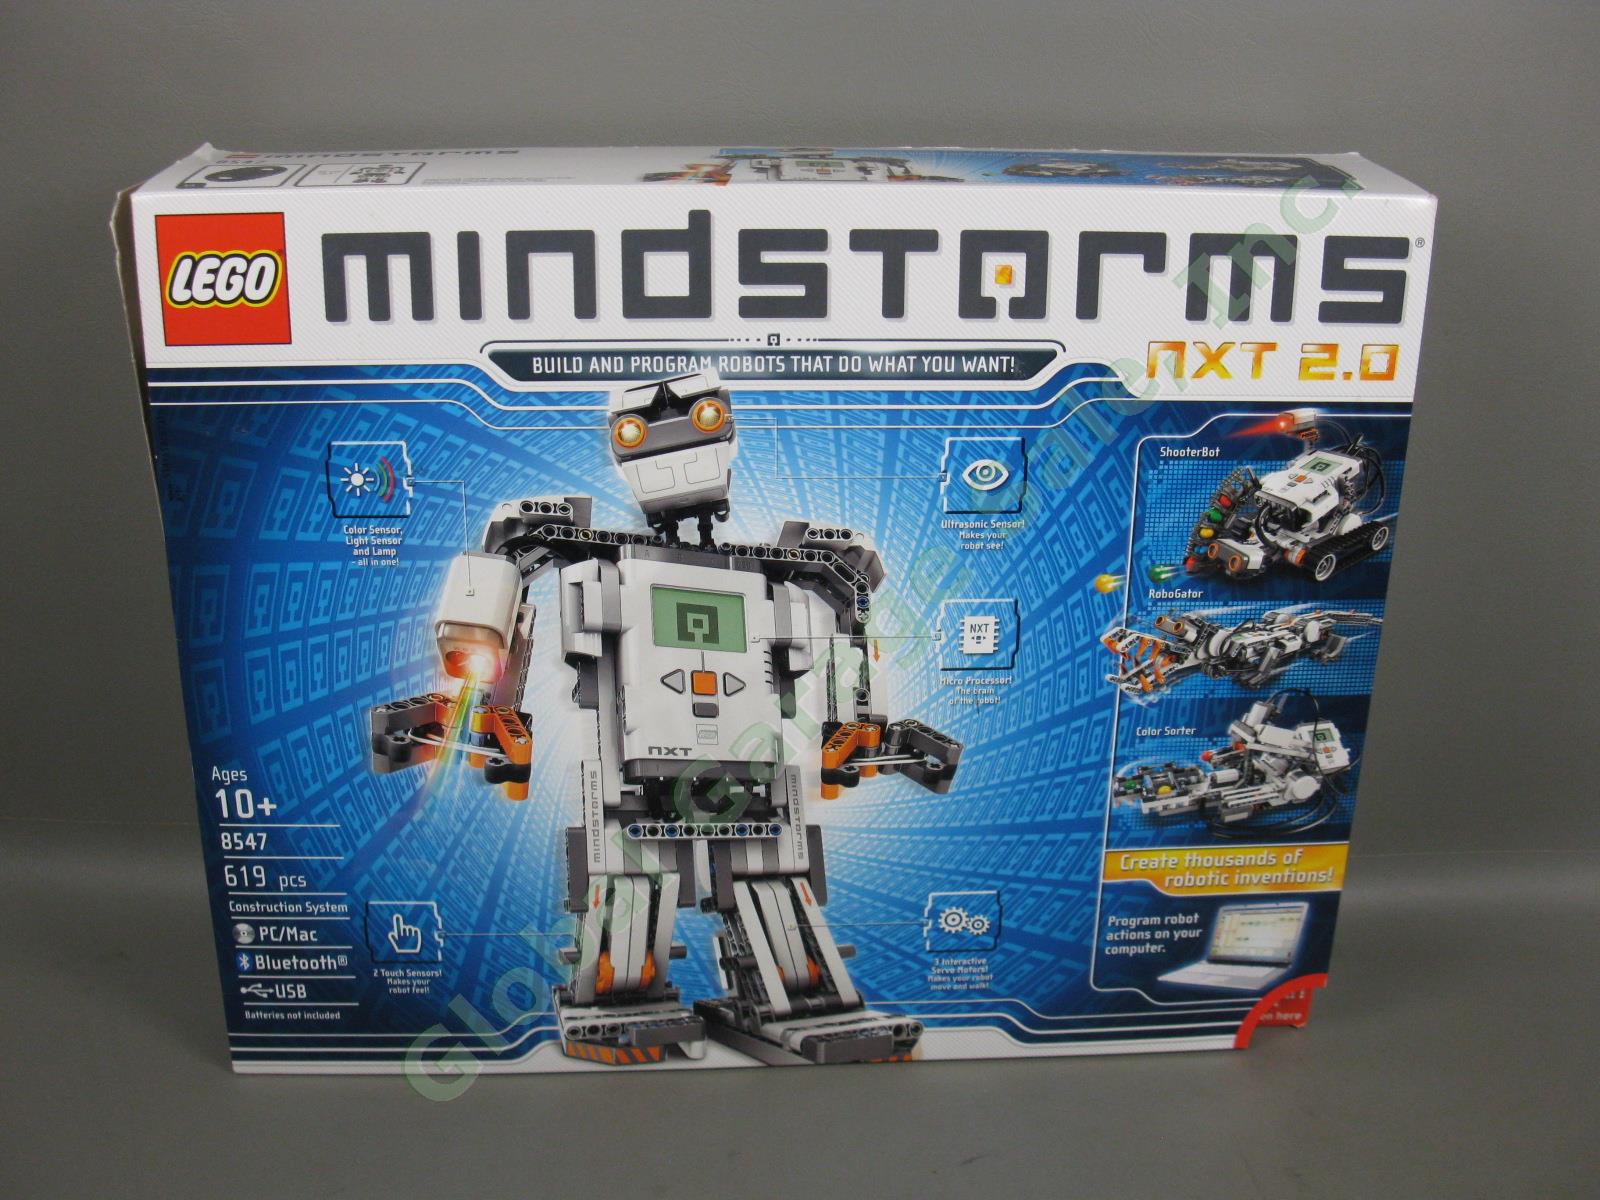 LEGO Mindstorms NXT 2.0 8547 Robot Building Program Set PC/MAC Bluetooth USB 10+